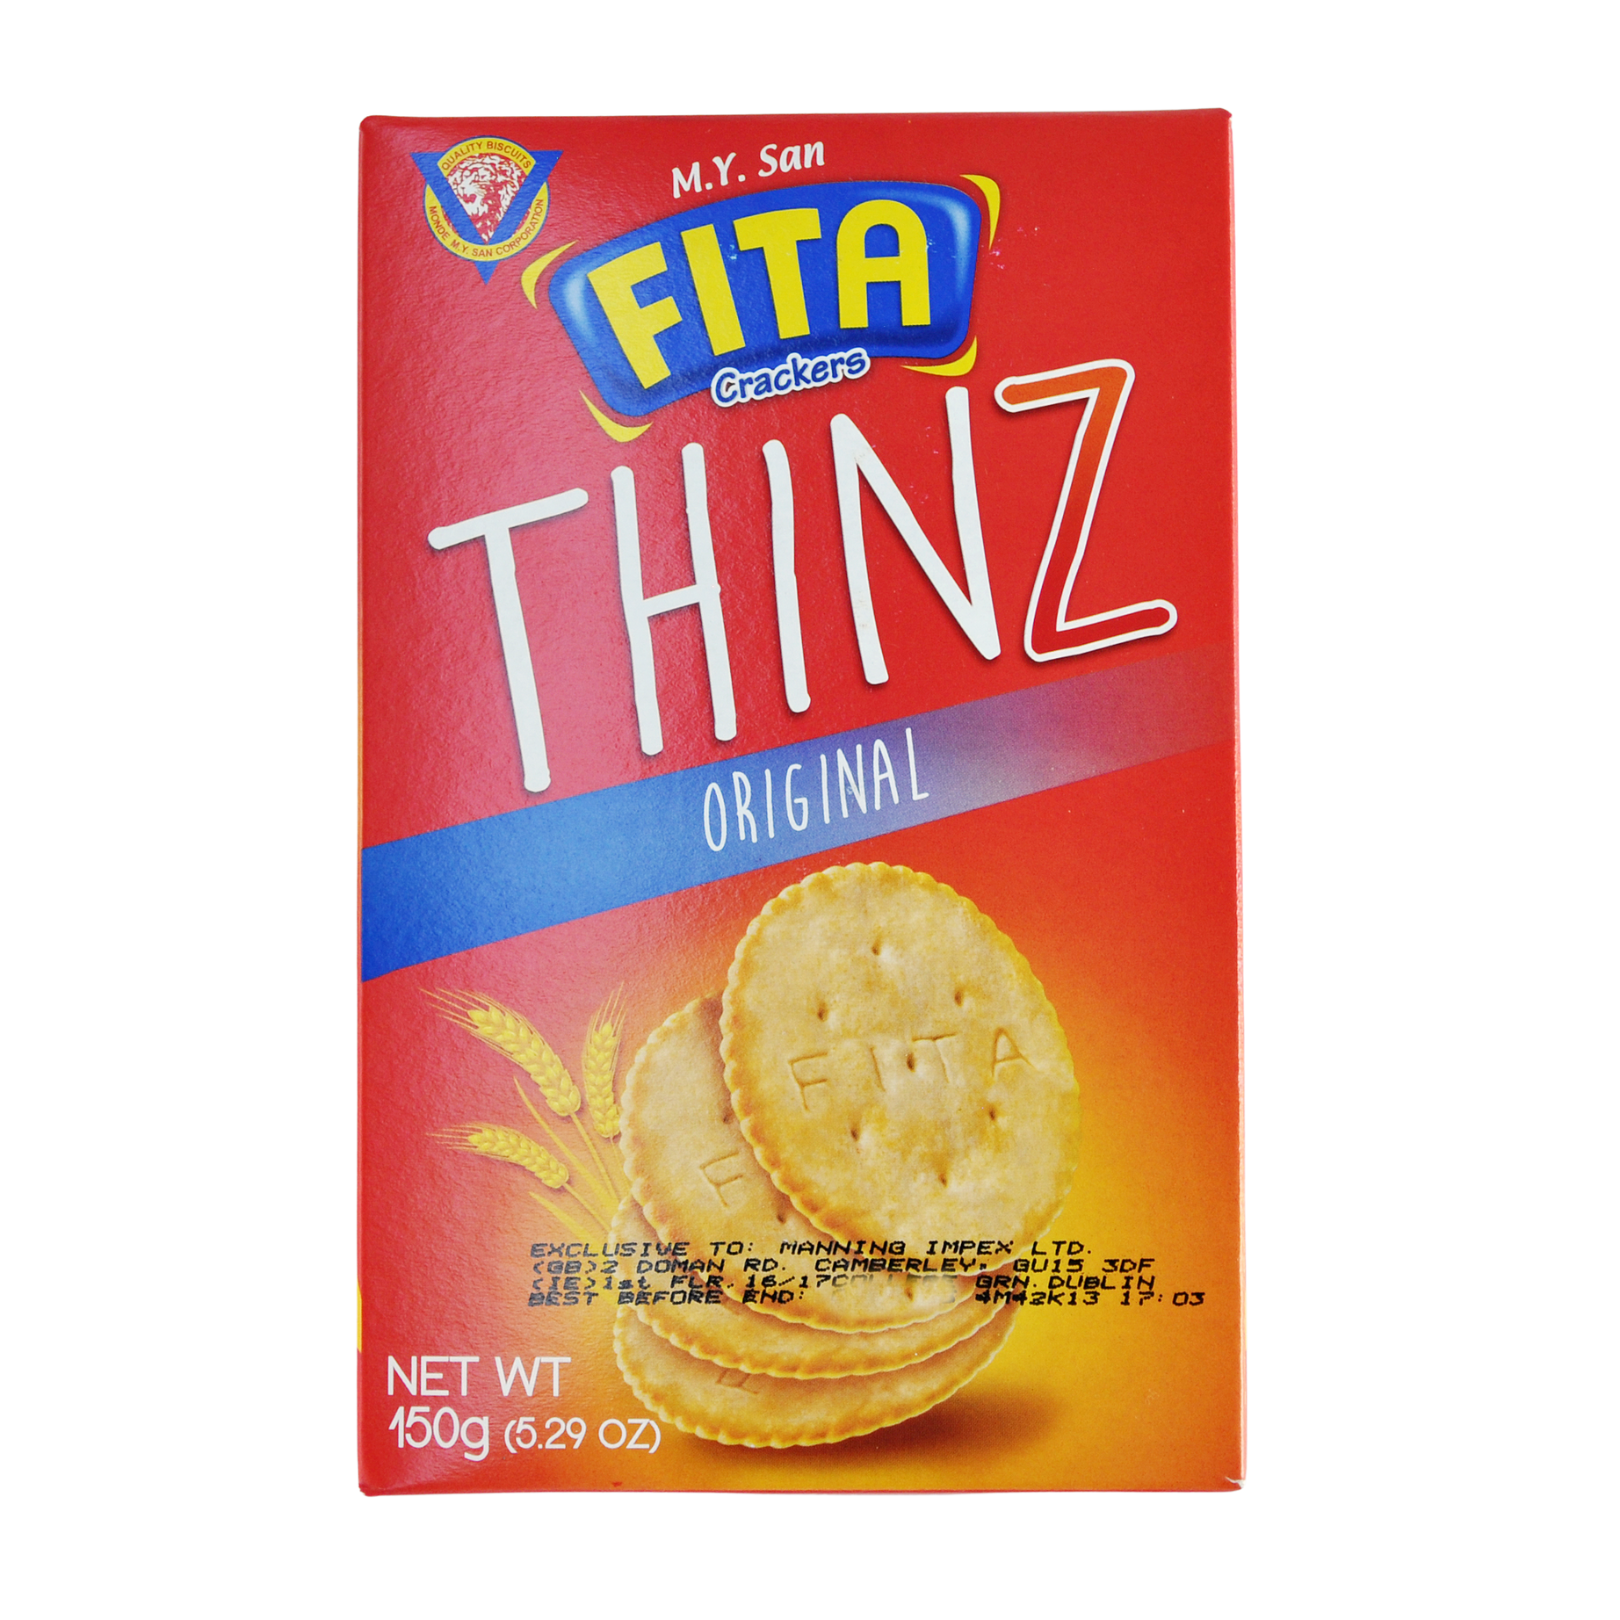 Filipino biscuits (crackers) Thinz original 150g by Fita